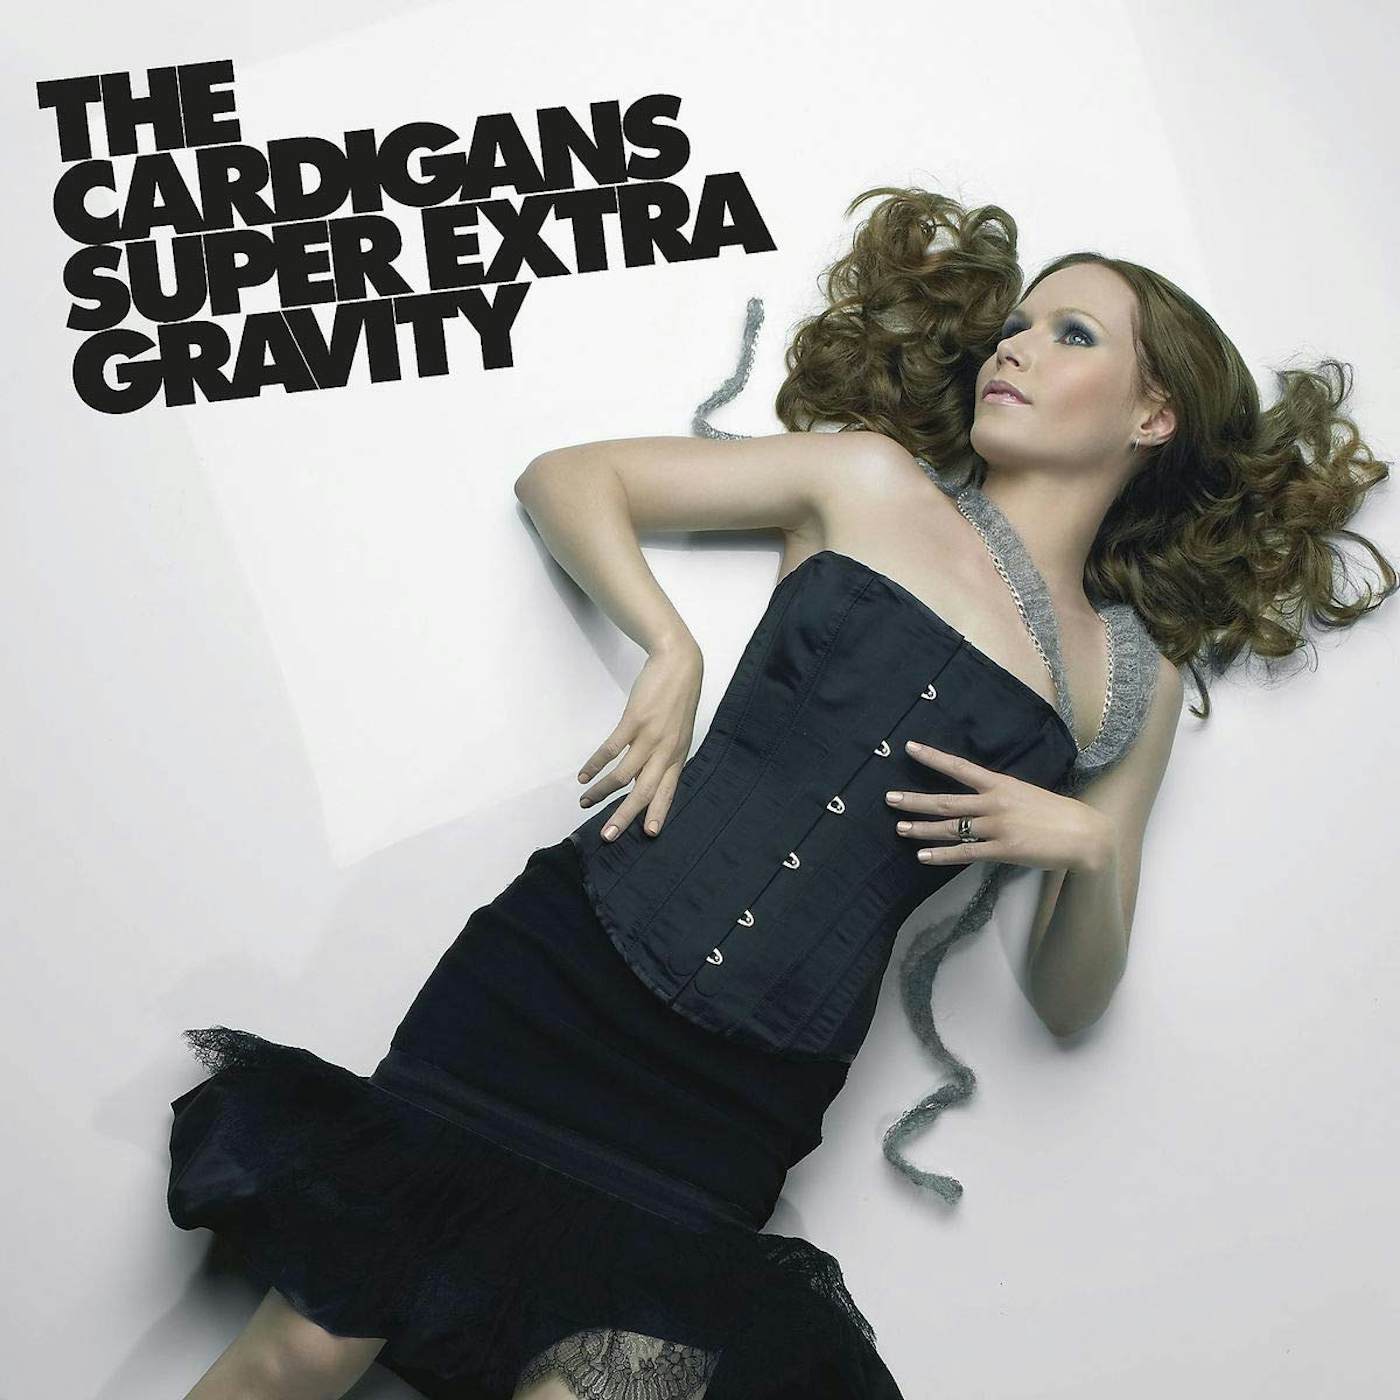 The Cardigans Super Extra Gravity Vinyl Record